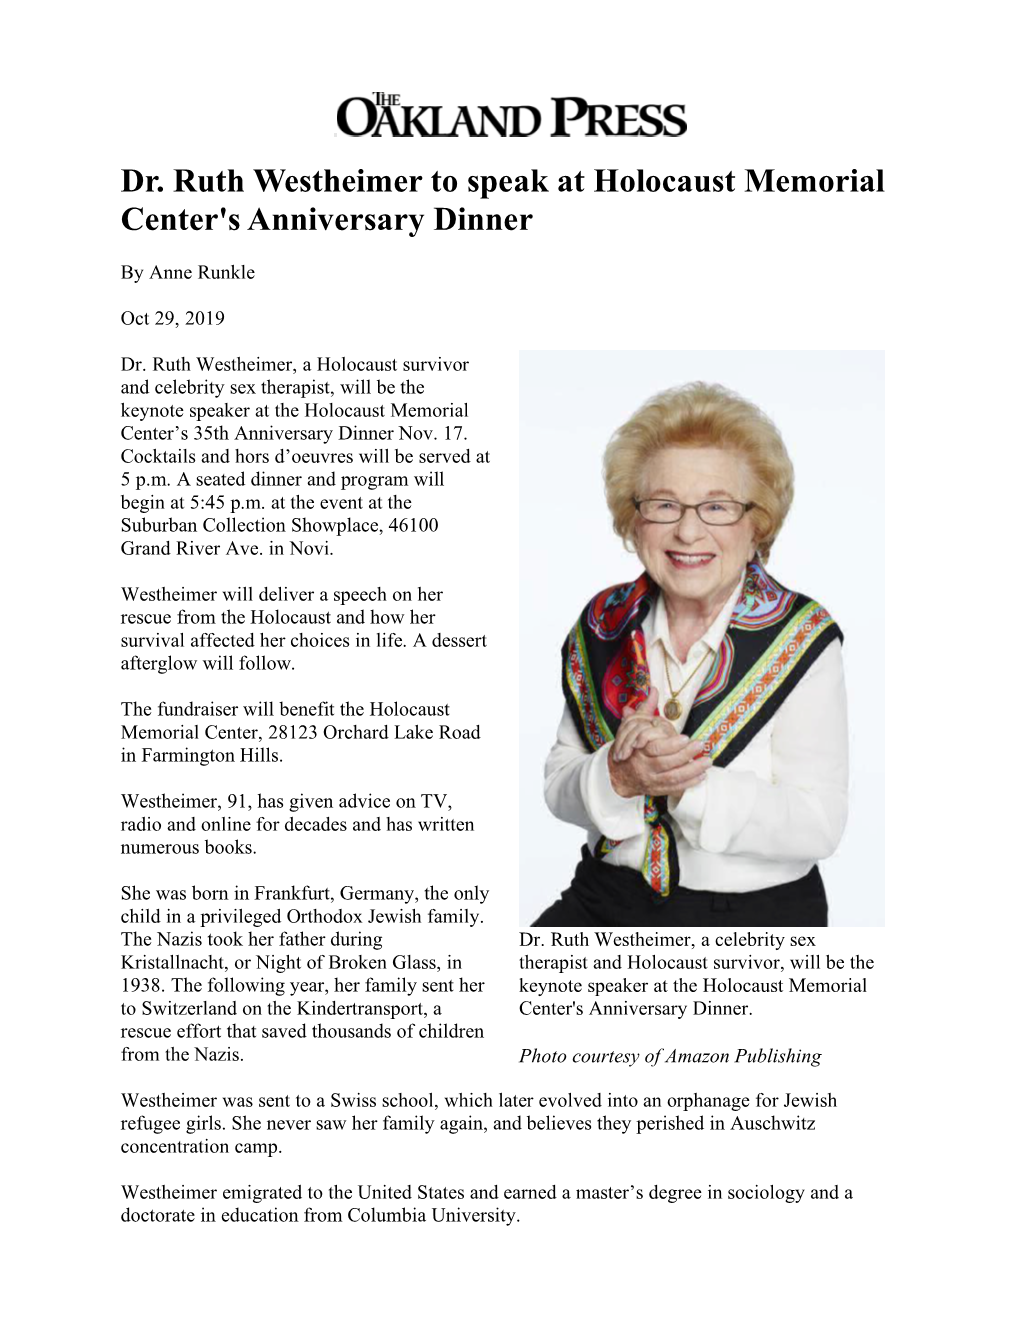 Dr. Ruth Westheimer to Speak at Holocaust Memorial Center's Anniversary Dinner